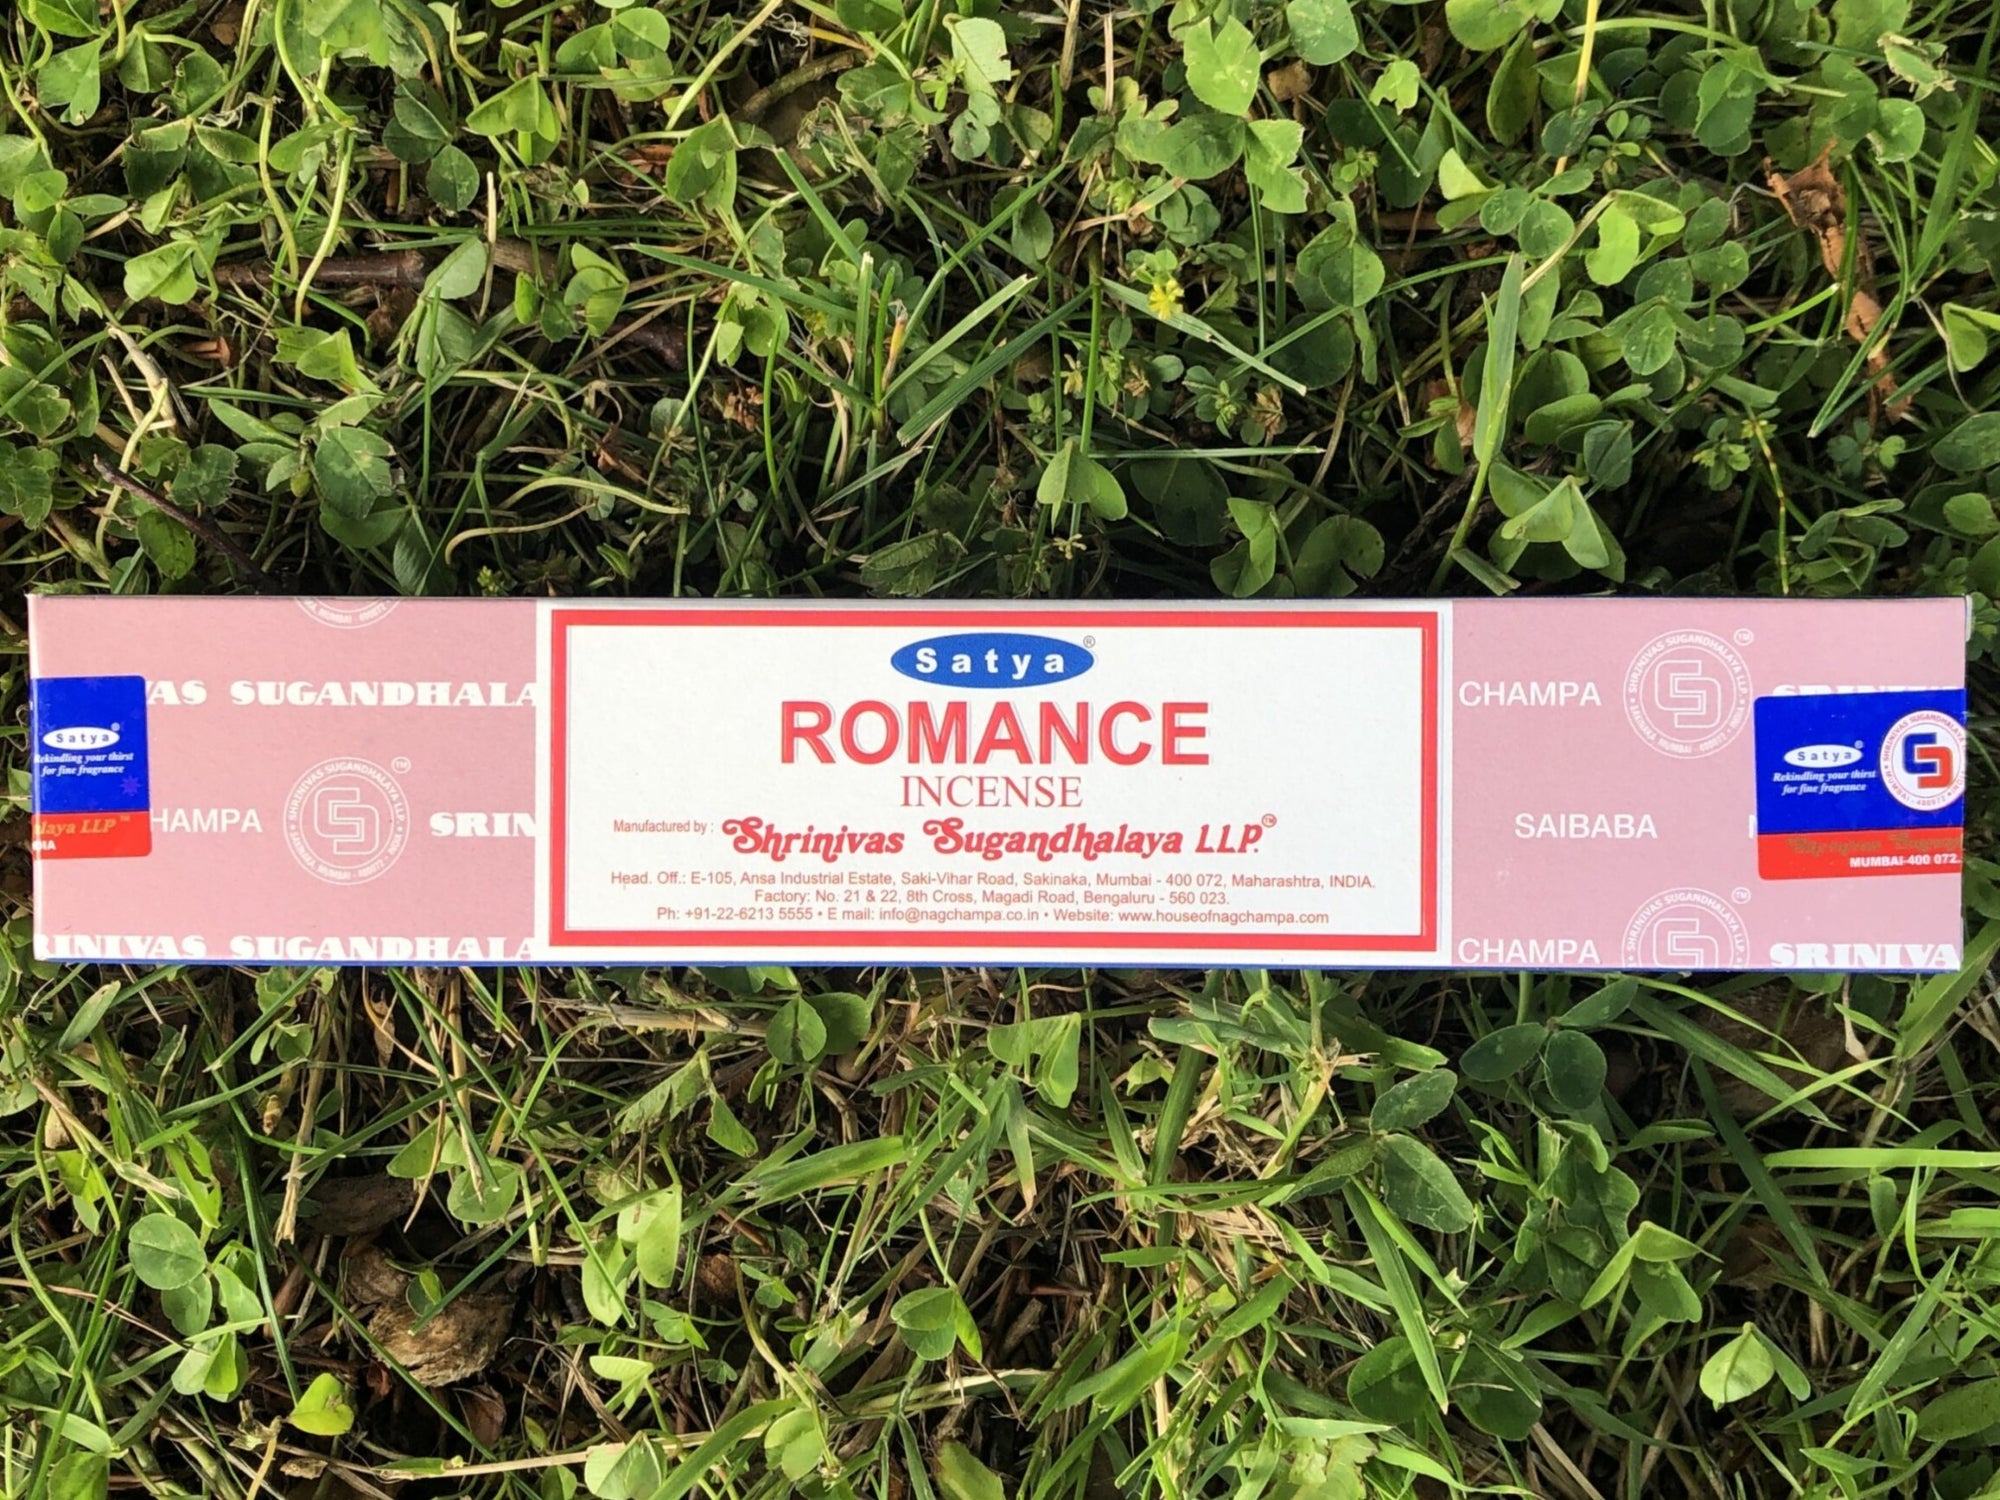 Romance Incense